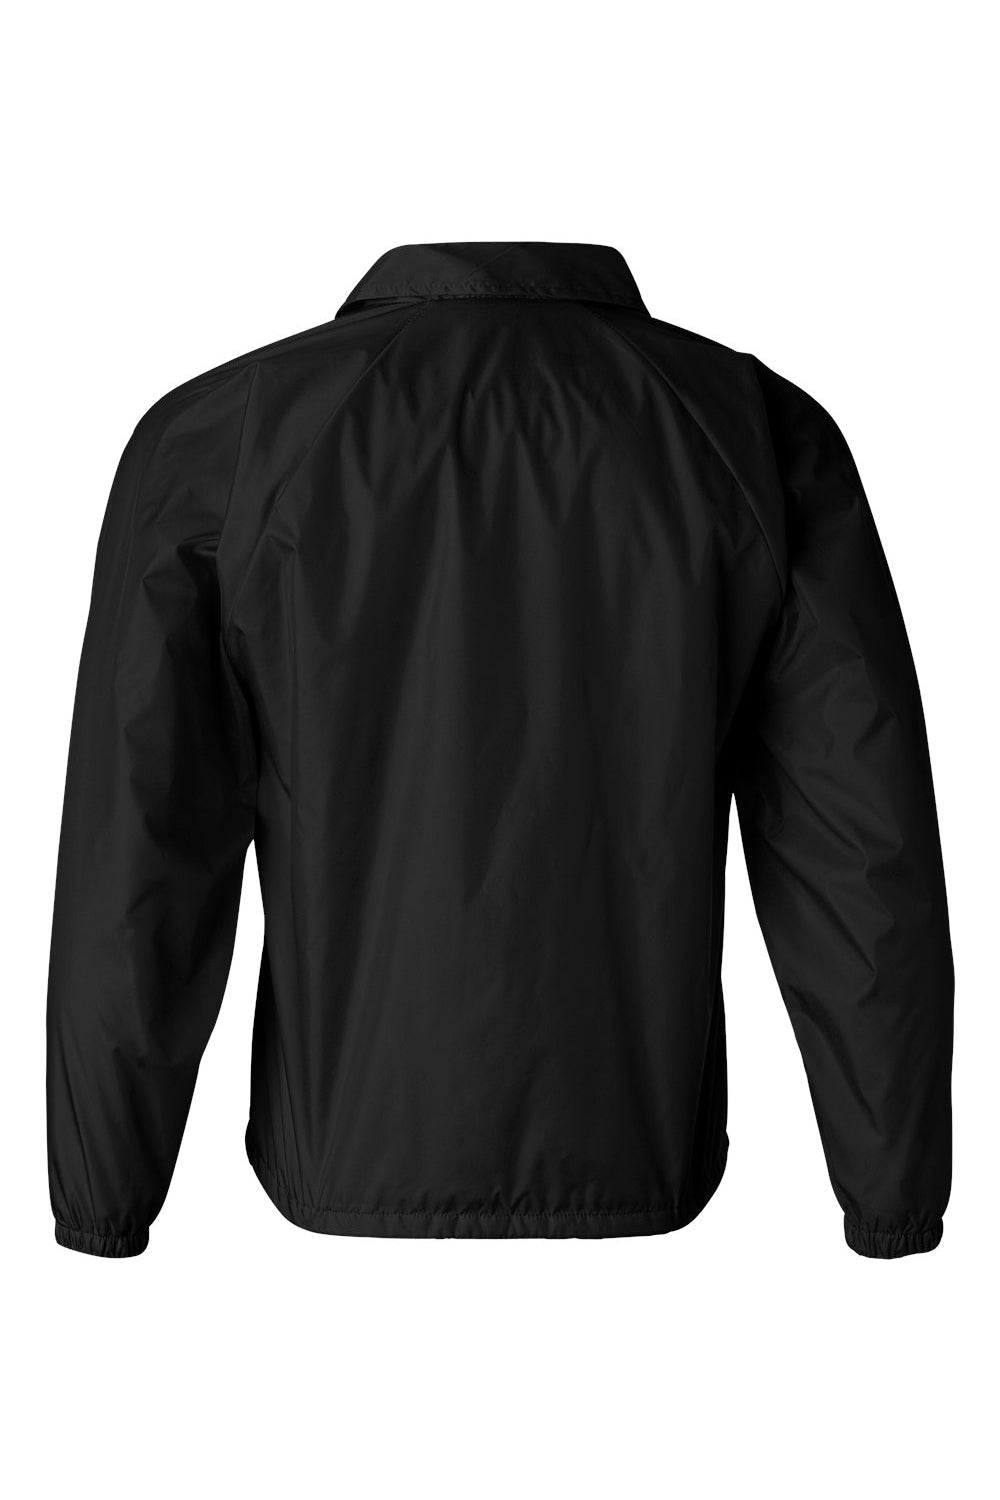 Augusta Sportswear 3100 Mens Water Resistant Snap Down Coaches Jacket Black Flat Back